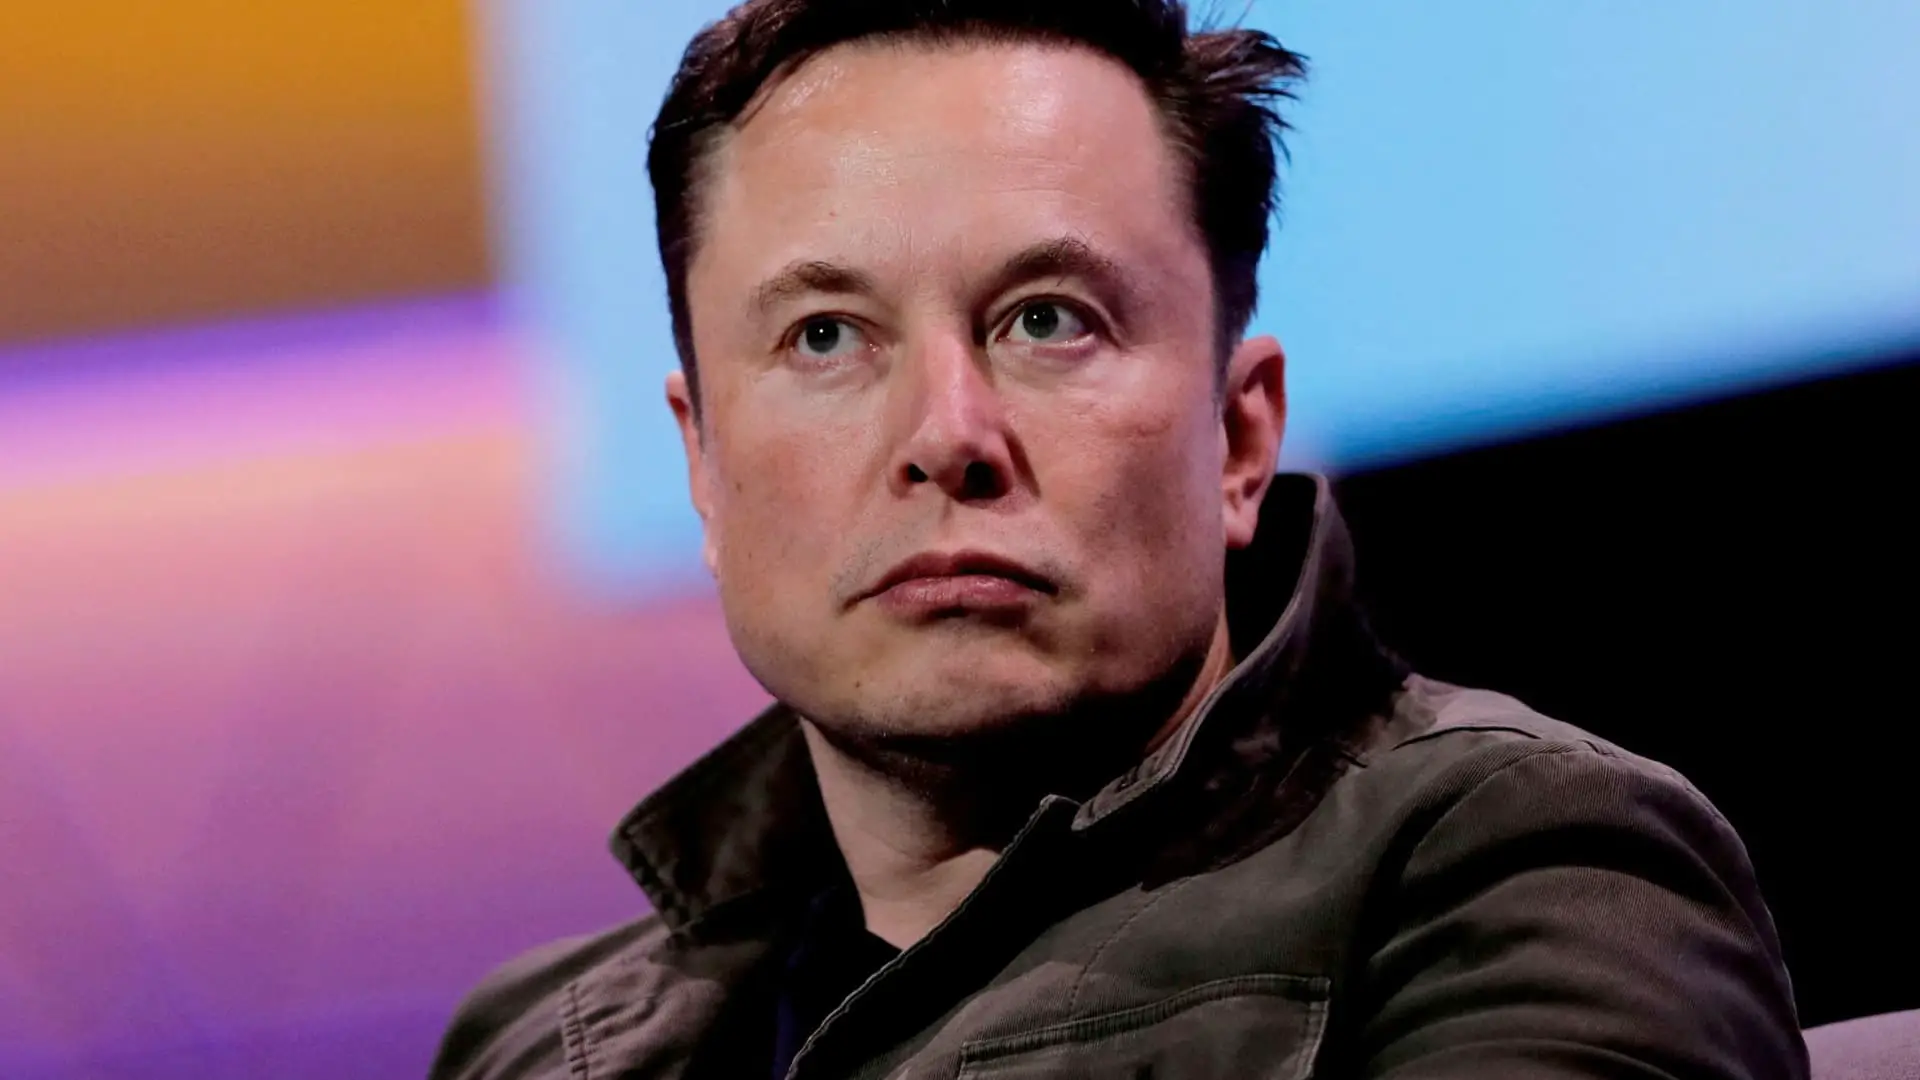 Elon Musk tells Tesla employees to ignore stock market craziness